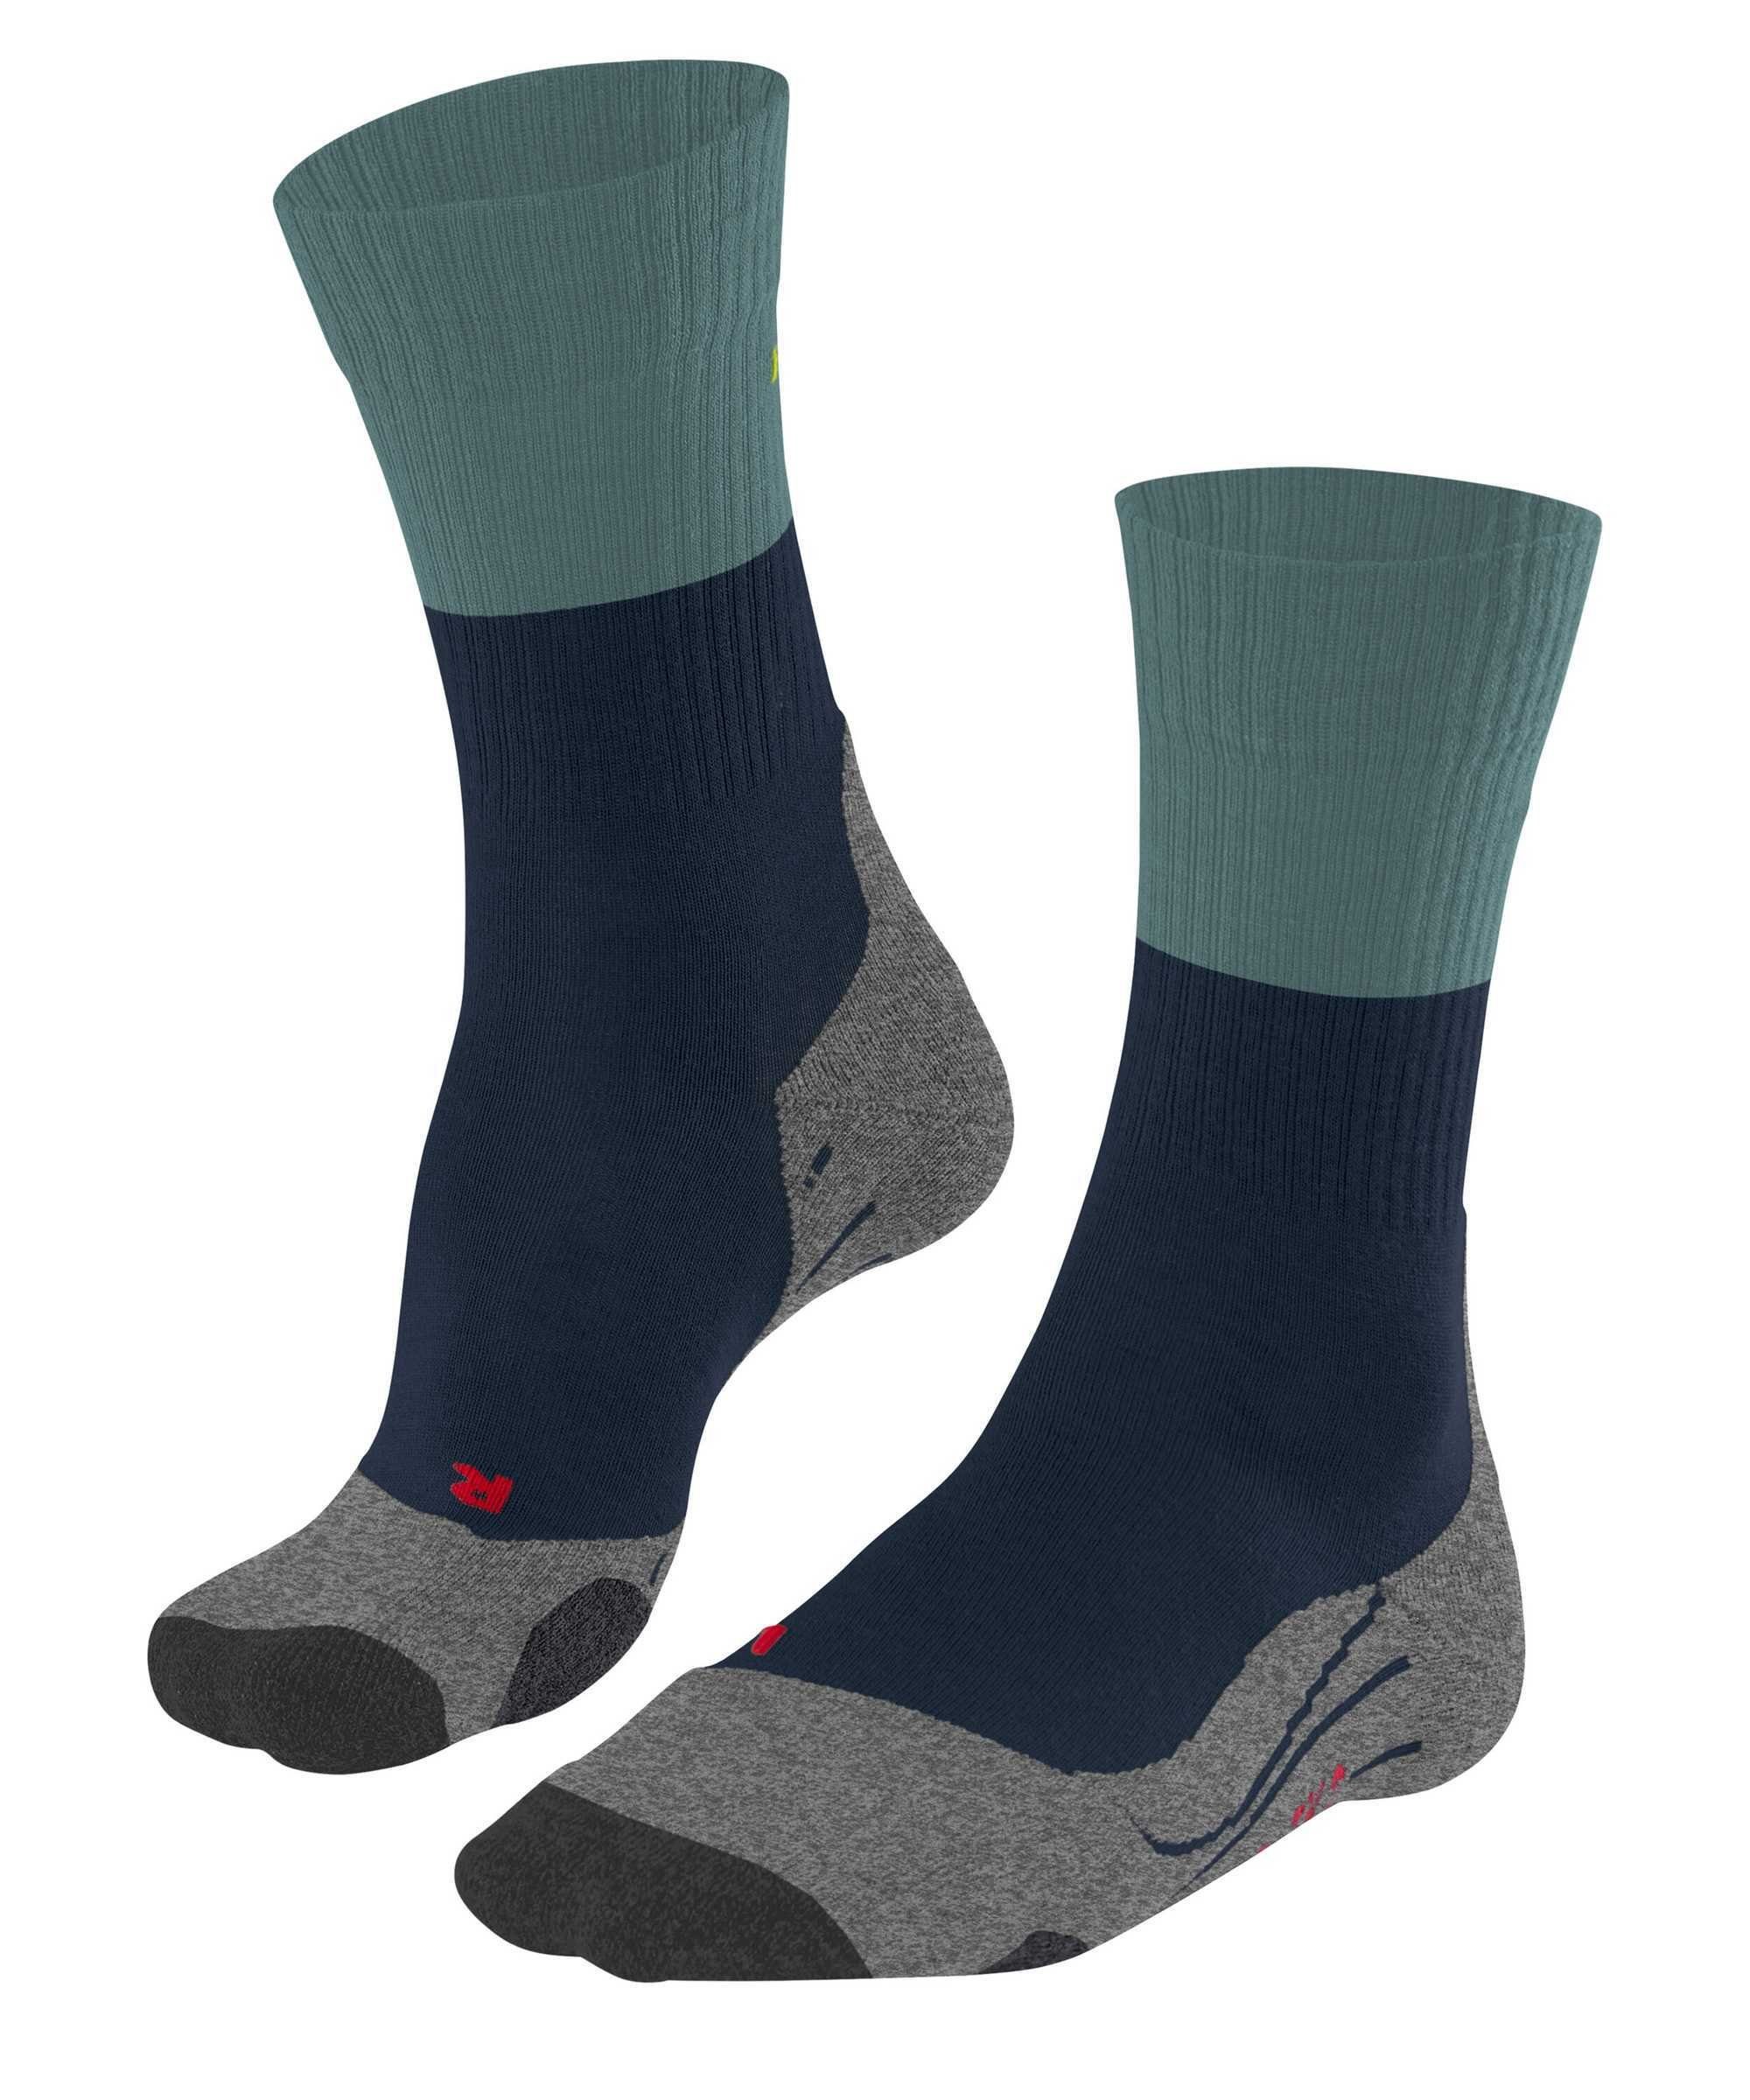 FALKE Sportsocken Herren Socken - Trekking Socken TK2, Polsterung Grau/Blau (Marine)